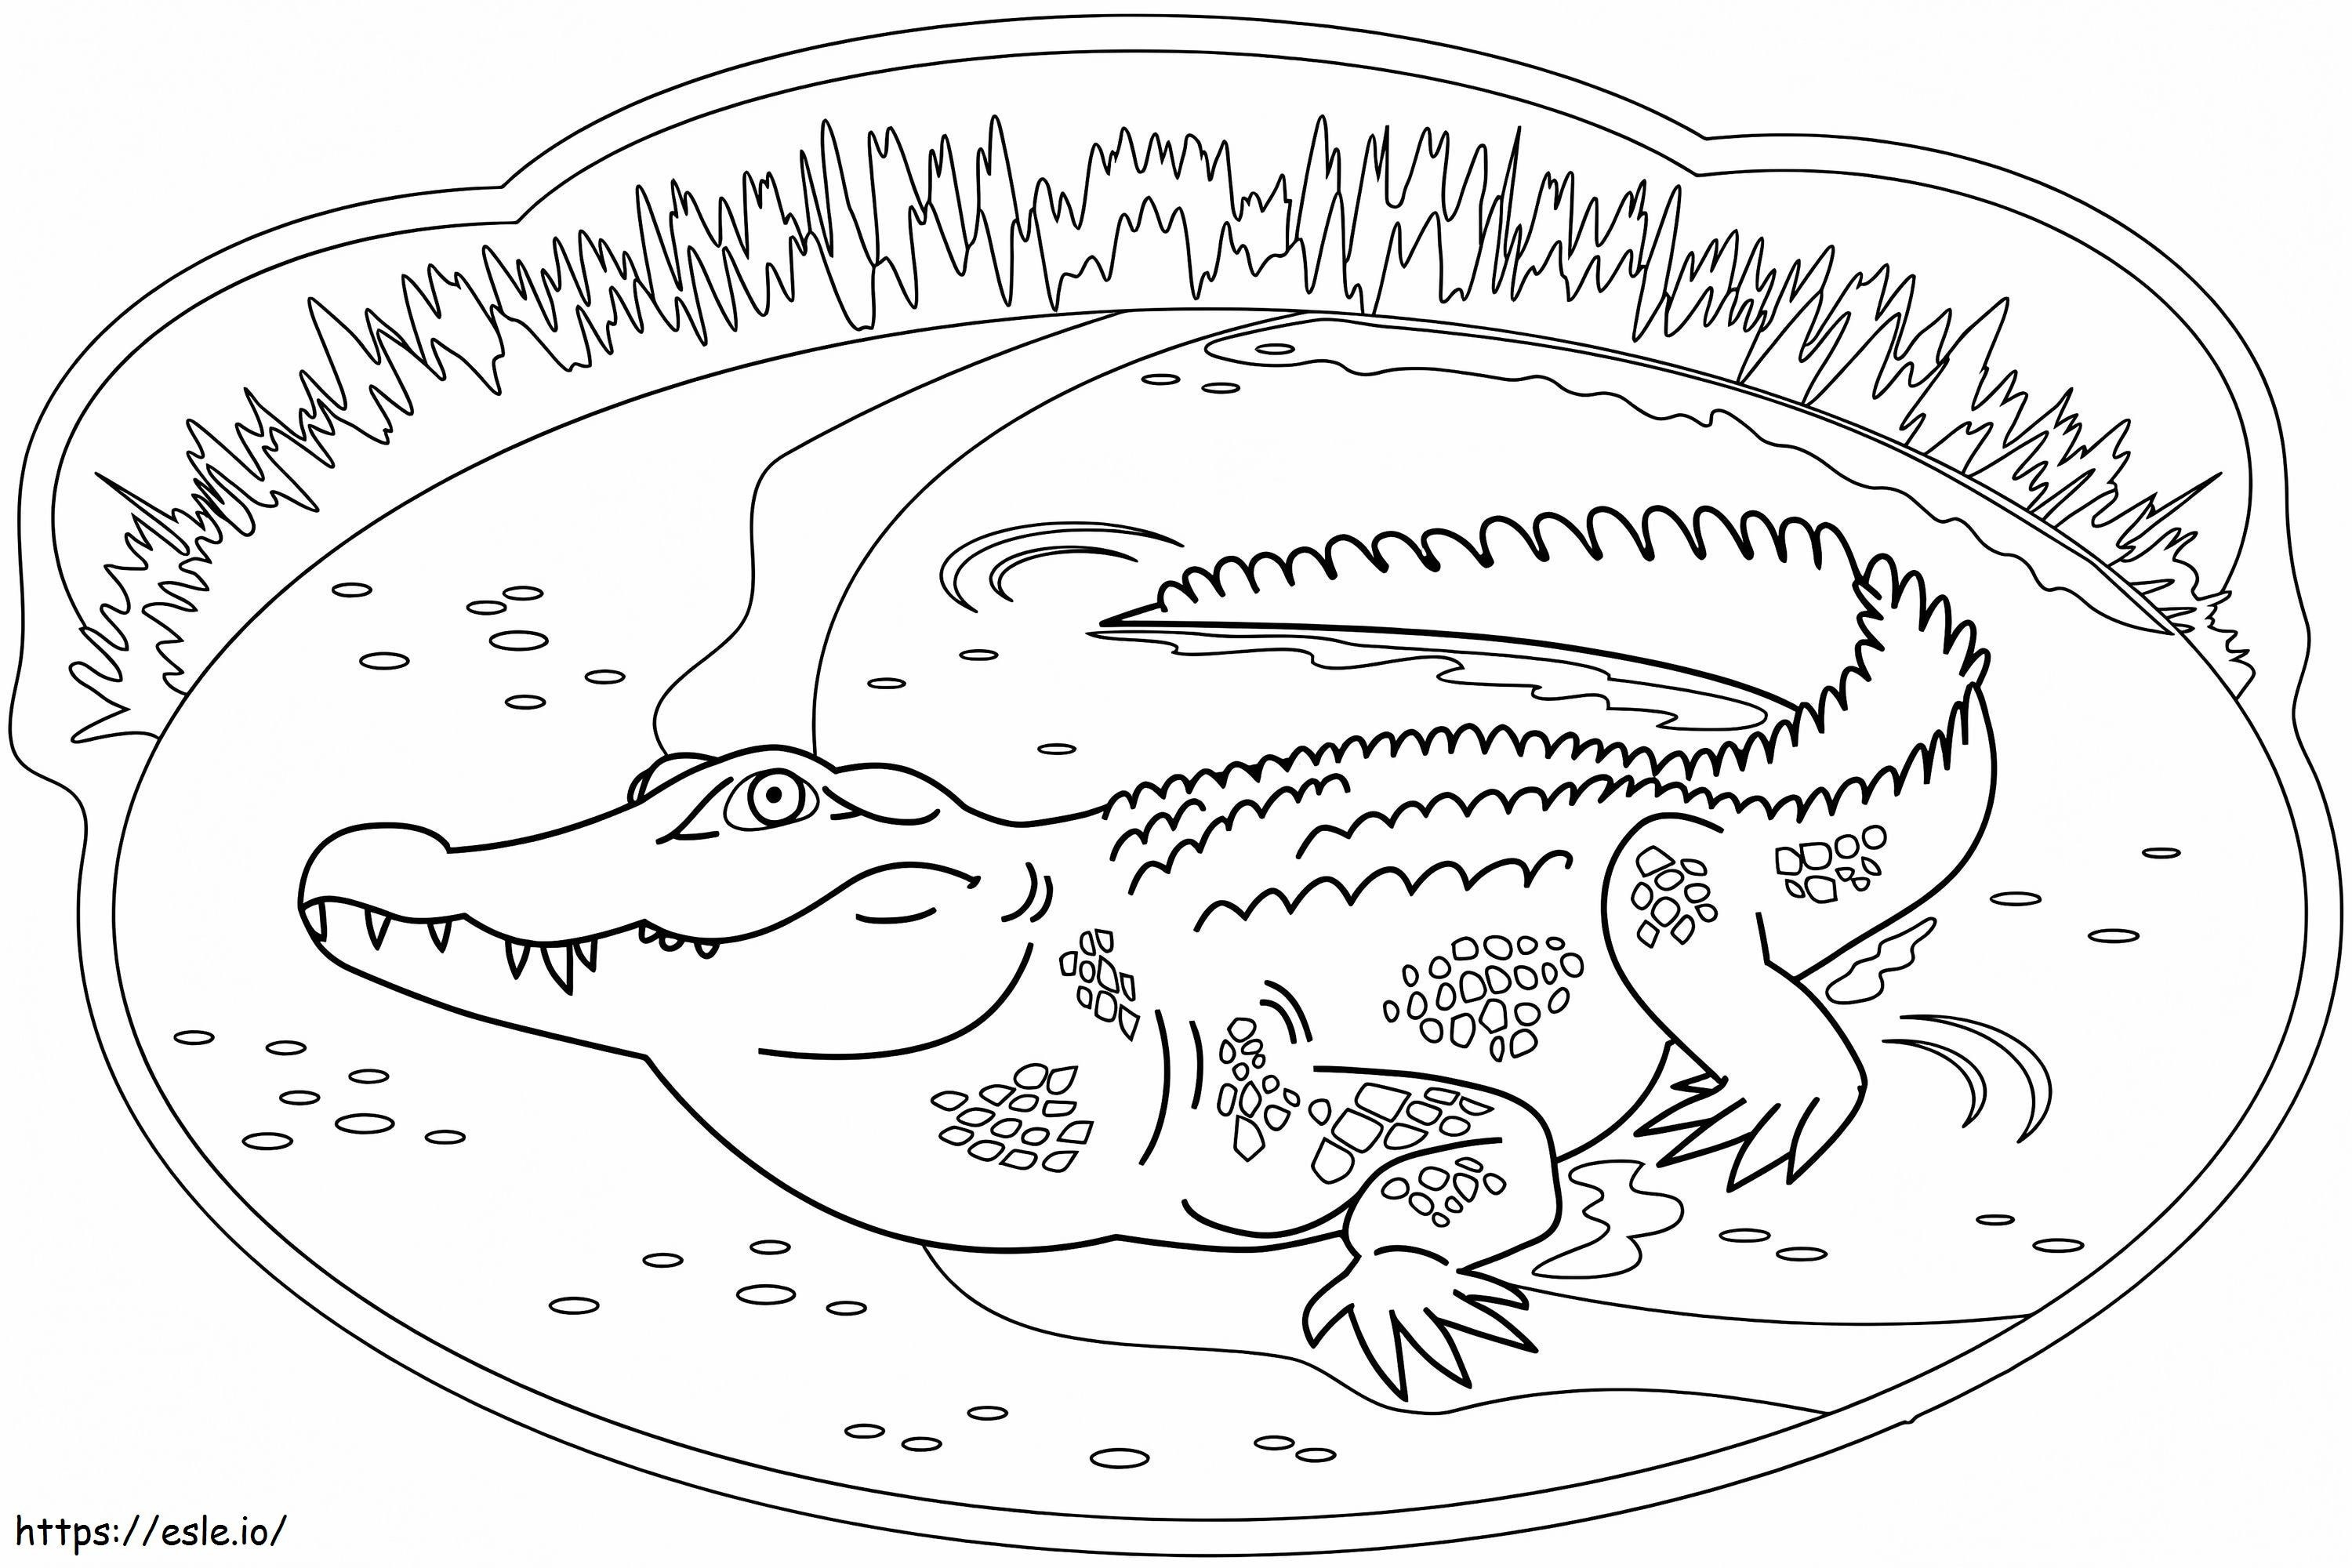 A Crocodile coloring page